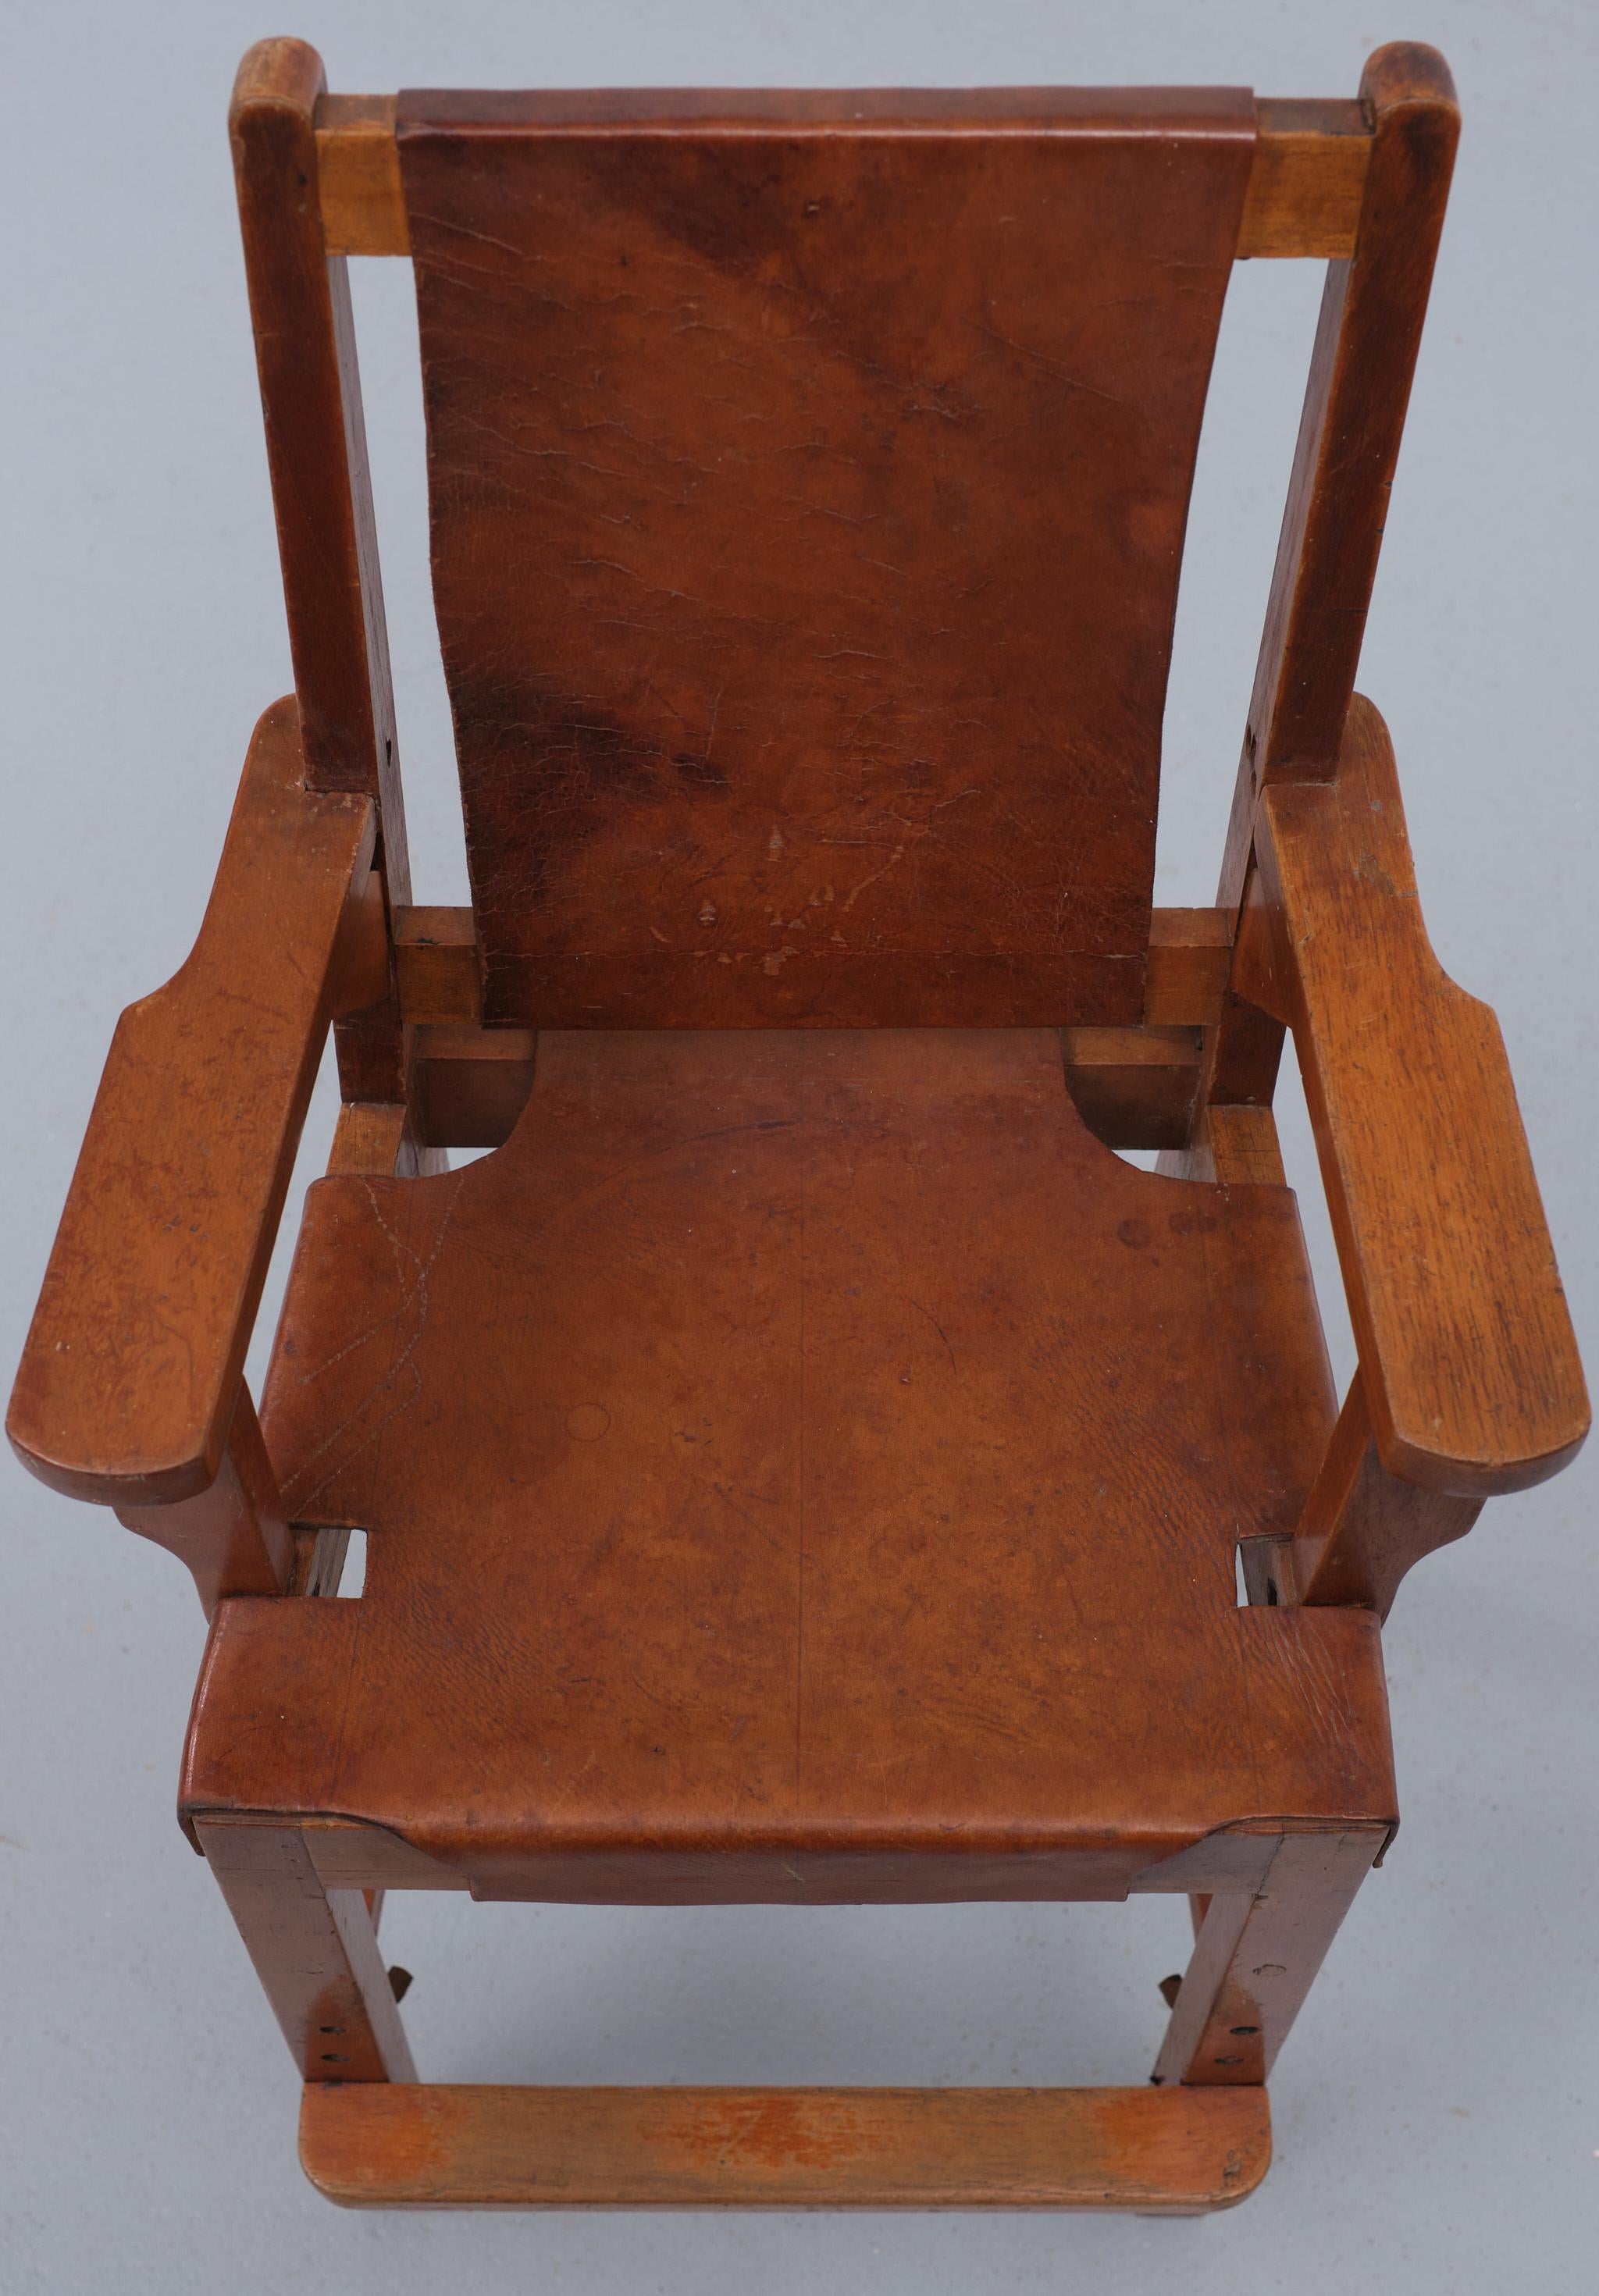 Modernist High Chair Gerrit Rietveld Style 1940s Dutch For Sale 1